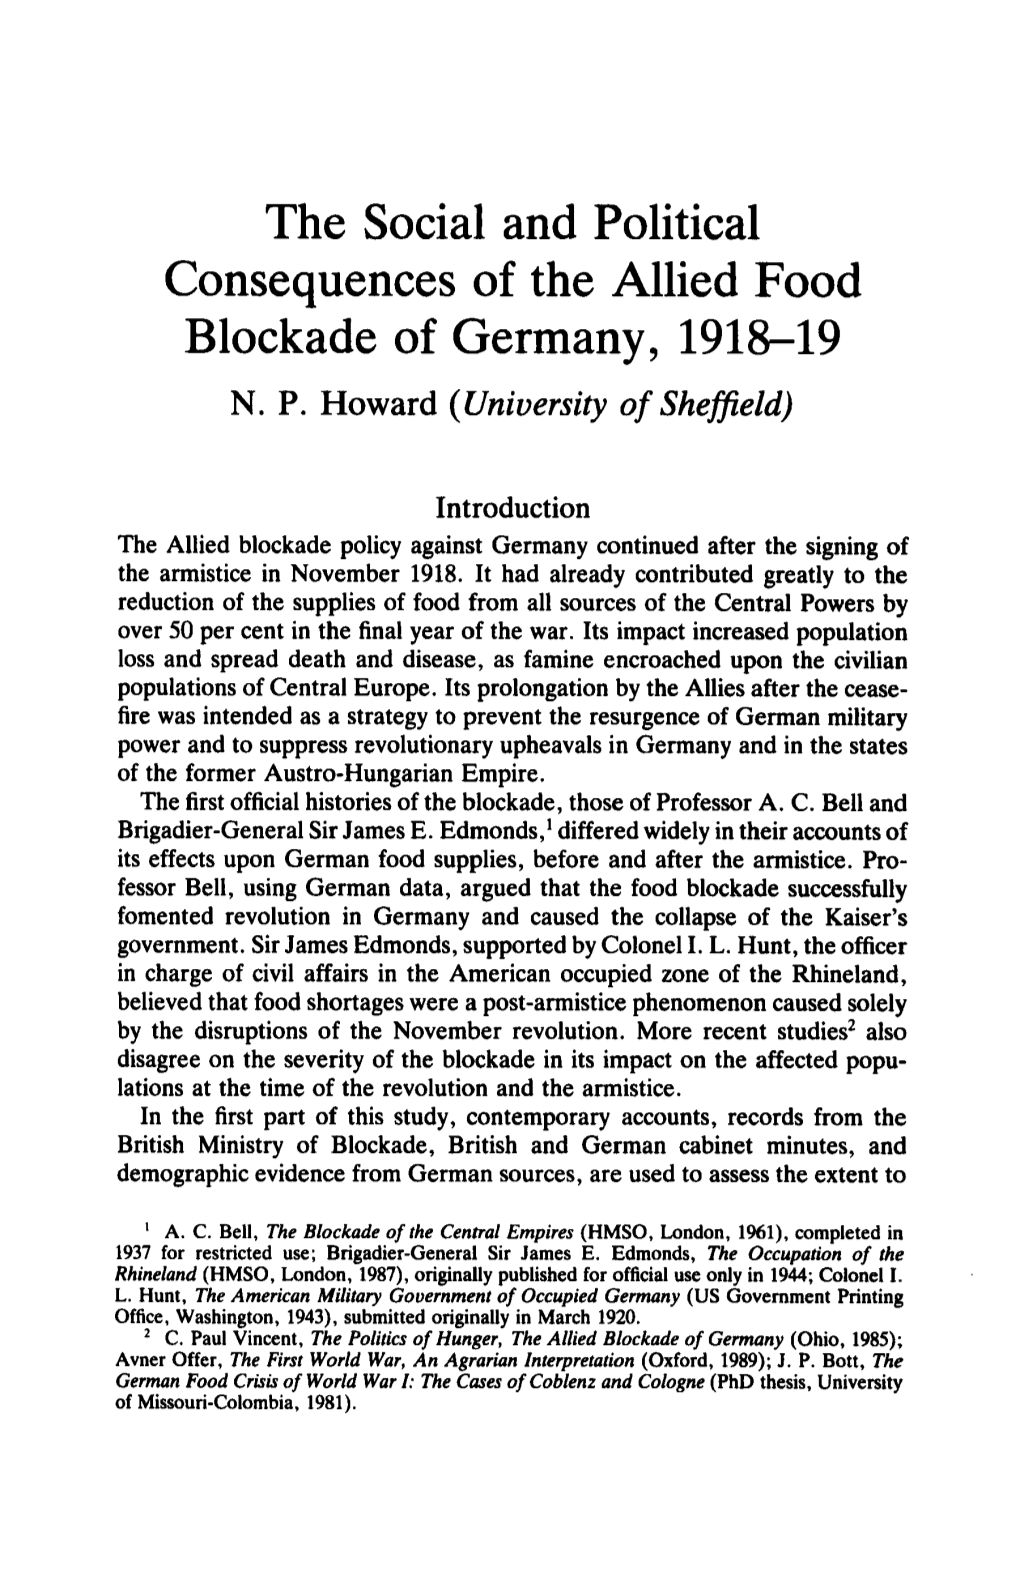 Blockade Germany.Pdf